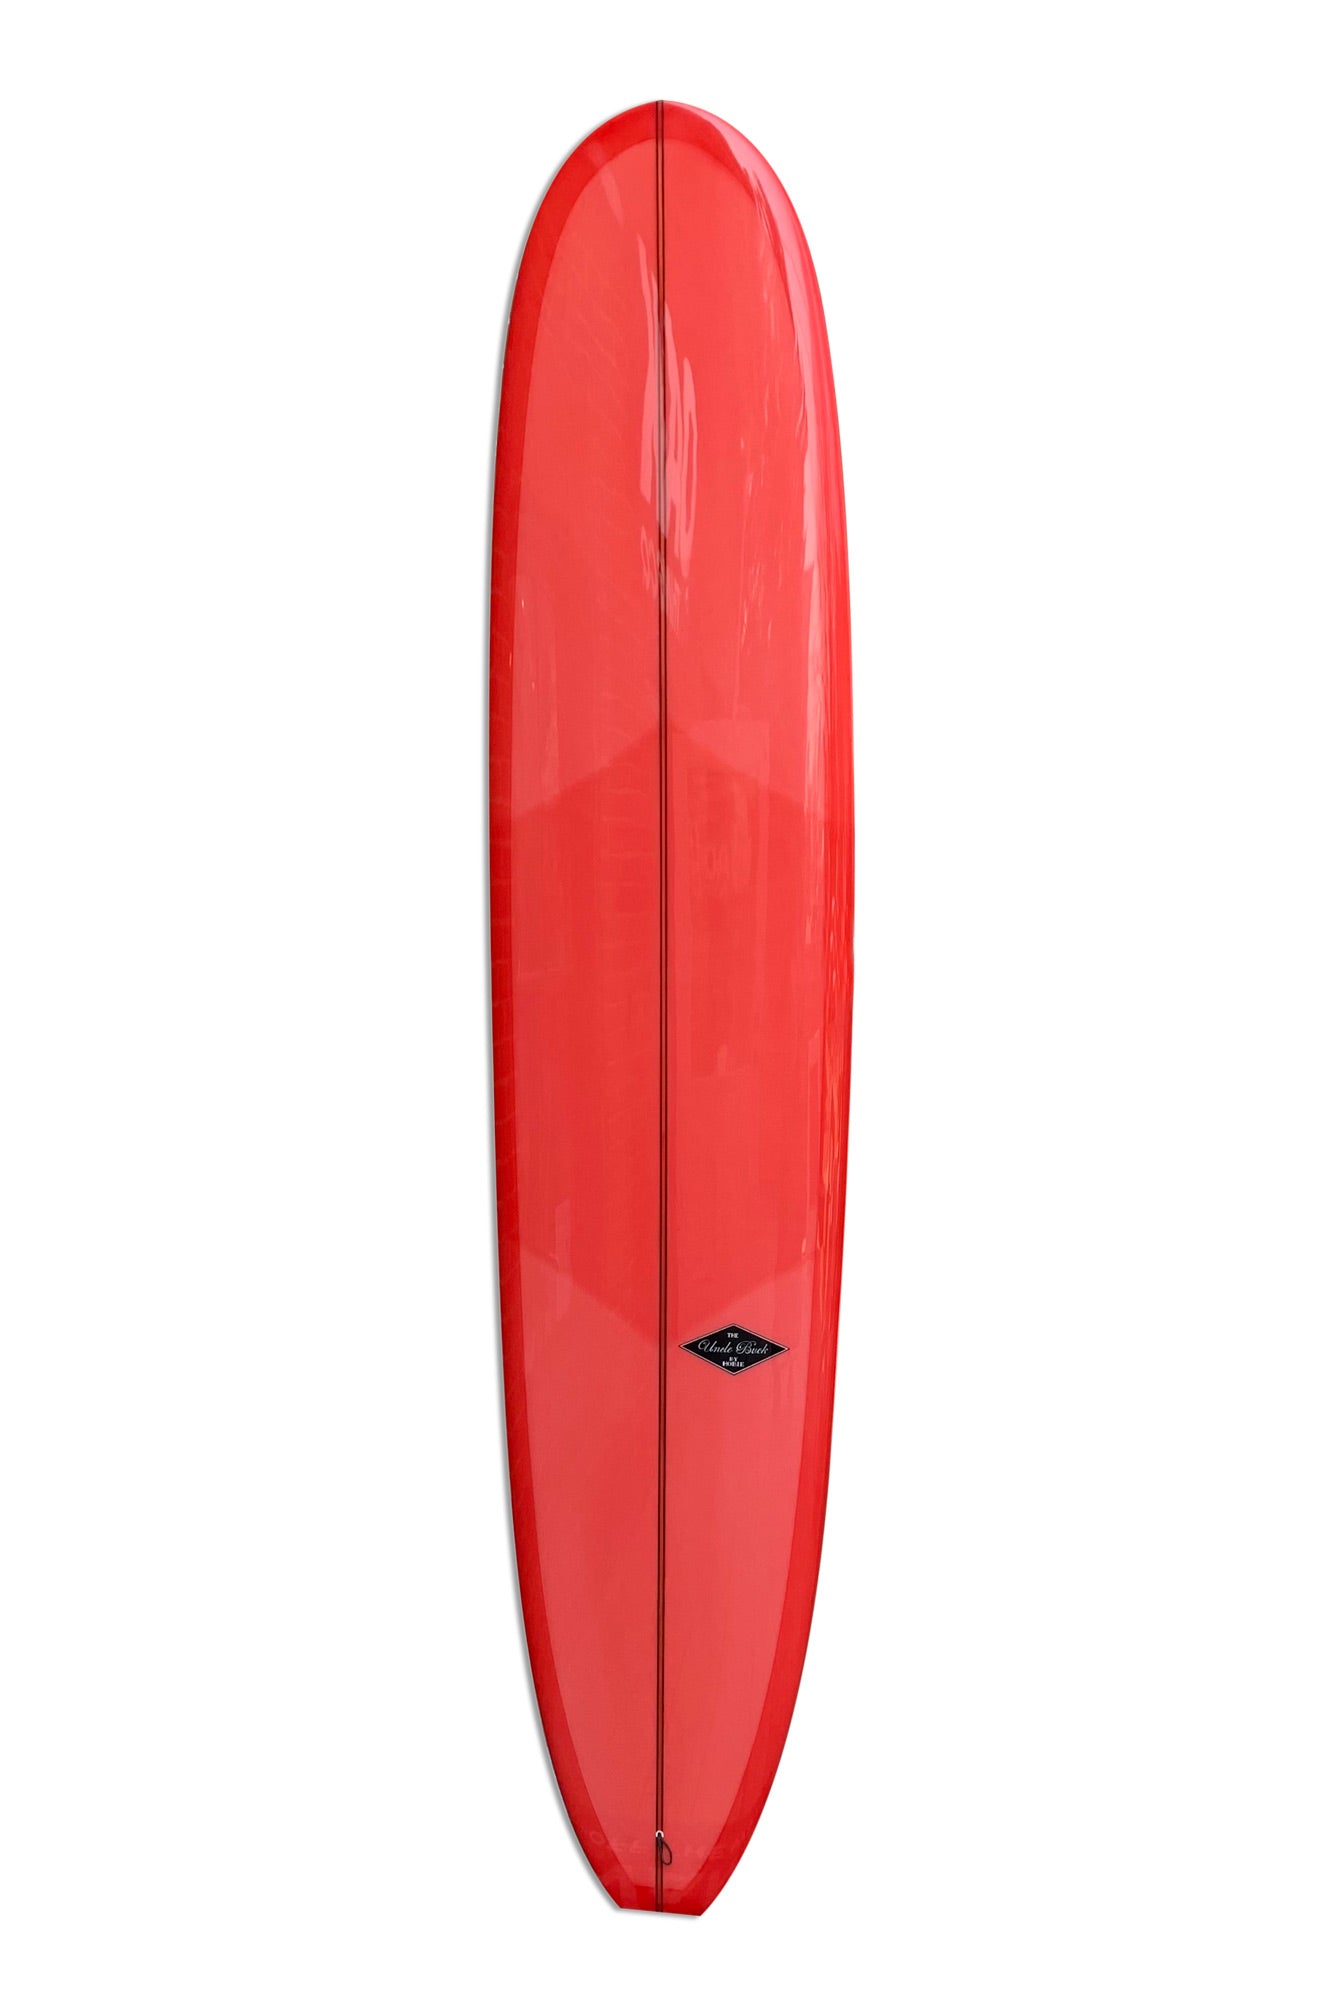 SURFBOARDS – OAK CLOTHING CO. INC.